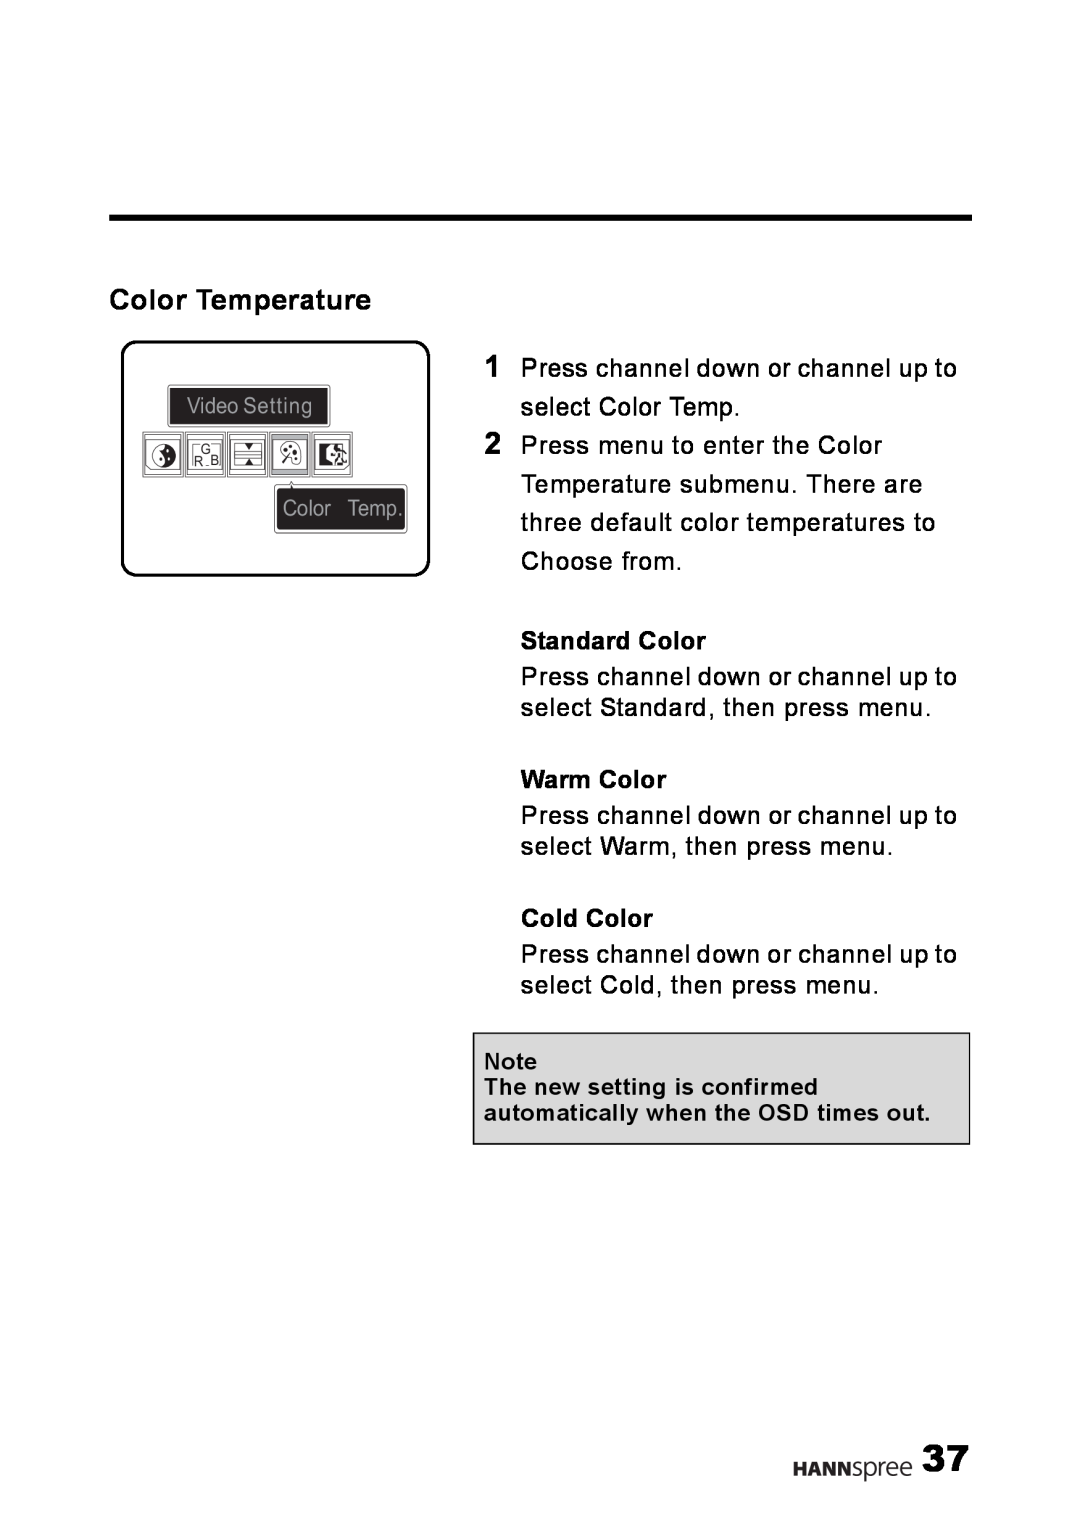 HANNspree LT02-12U1-000 user manual Color Temperature, Standard Color, Warm Color, Cold Color 